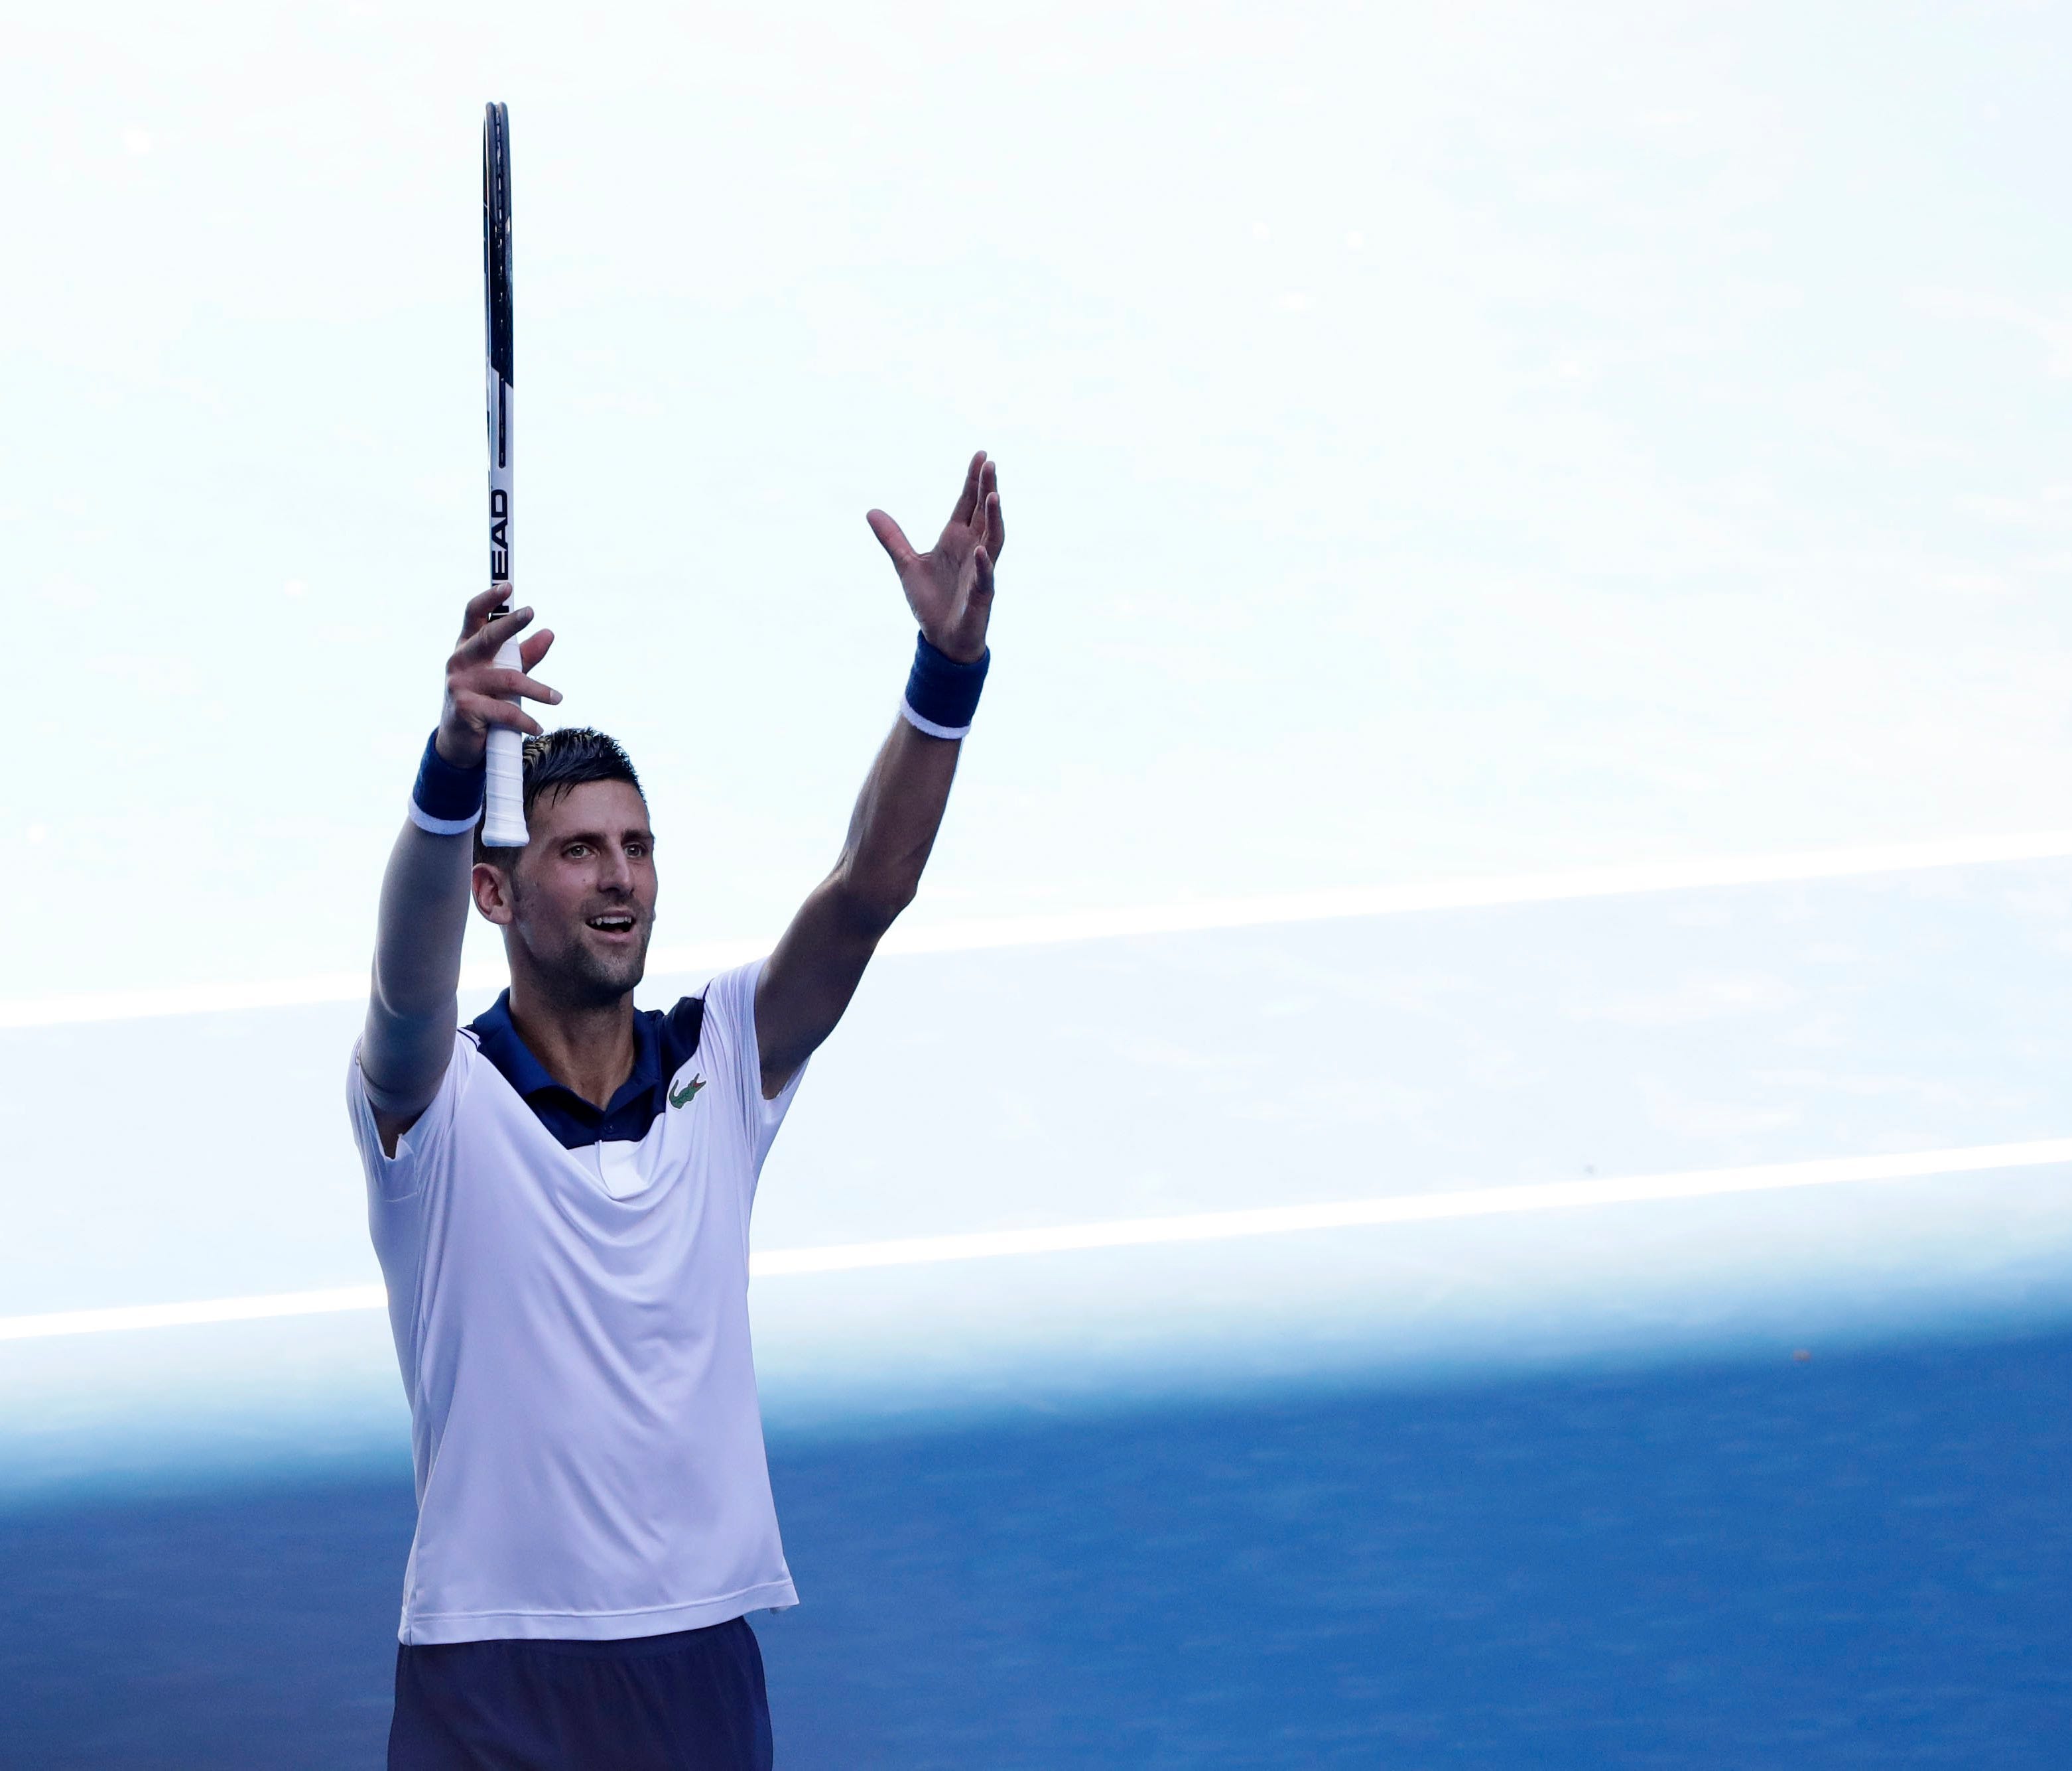 Djokovic celebrates after winning his second round match against Gael Monfils.